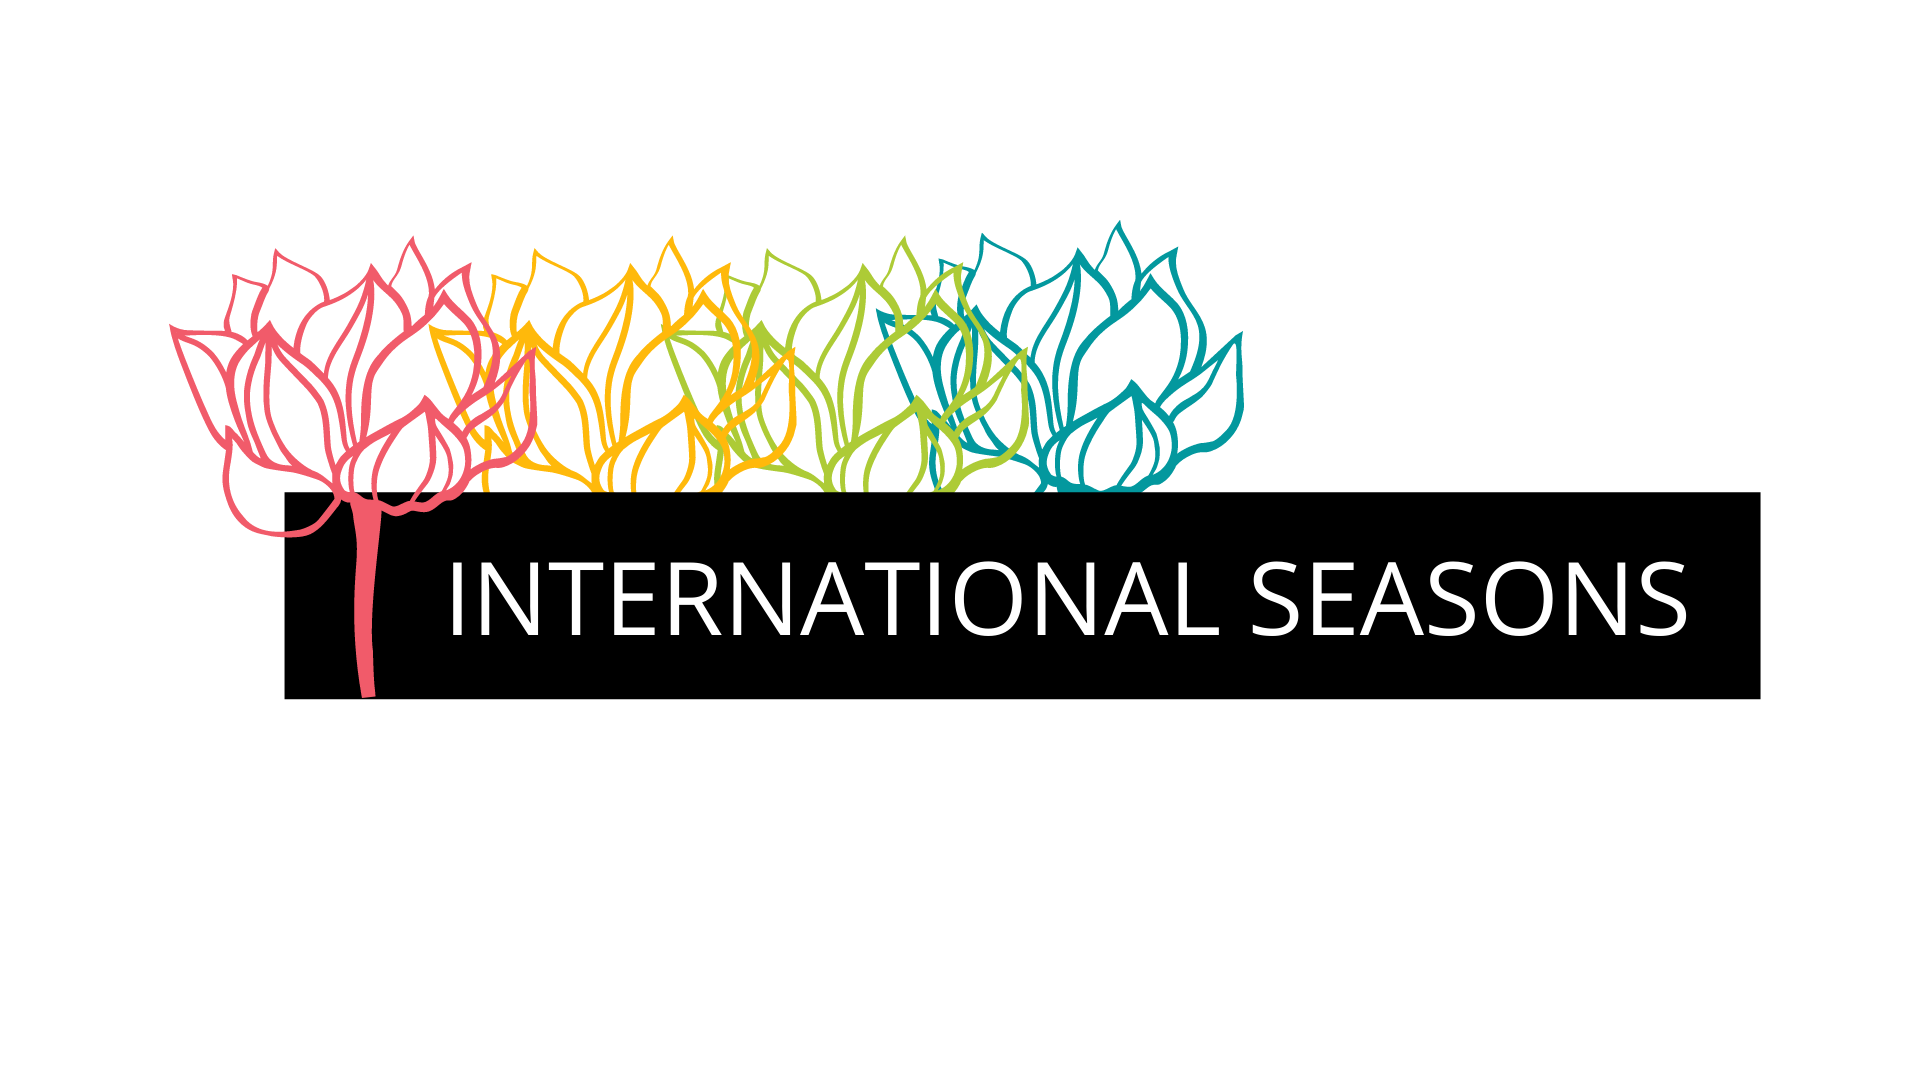 International Seasons